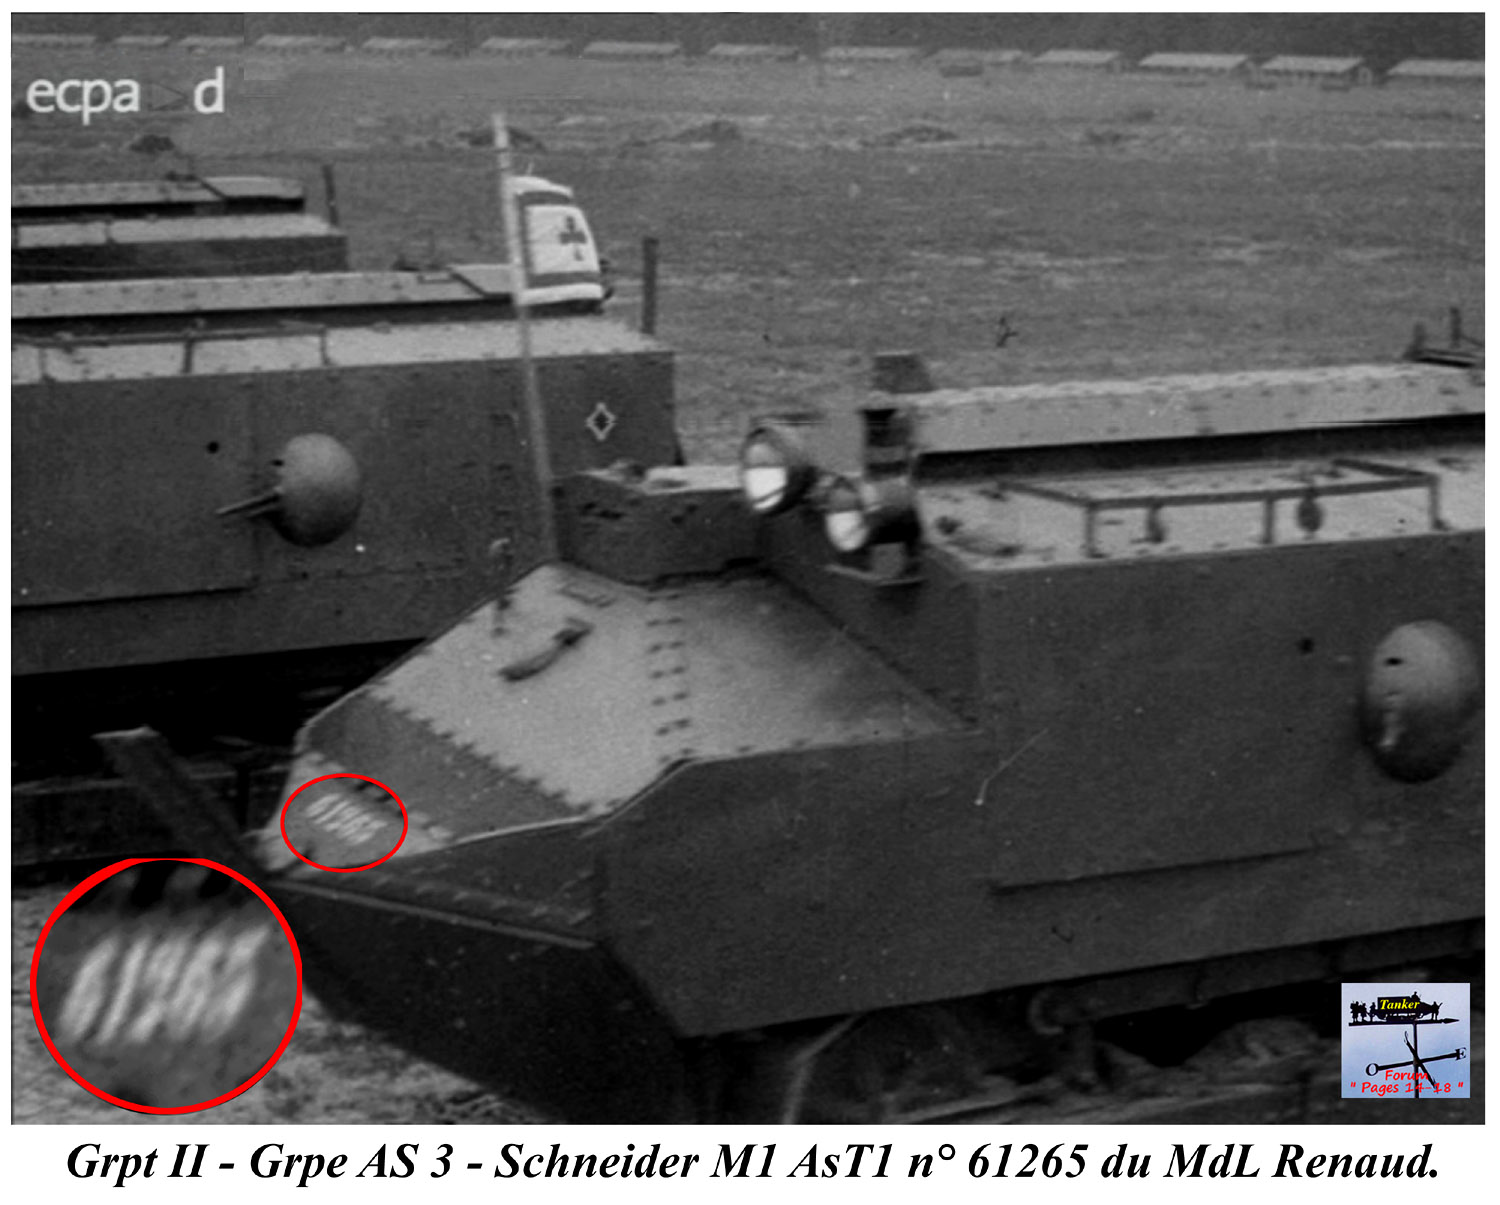 35 - Grpt II - AS 3 - Schneider M1 AsT1 n° 61265 - 35a.jpg